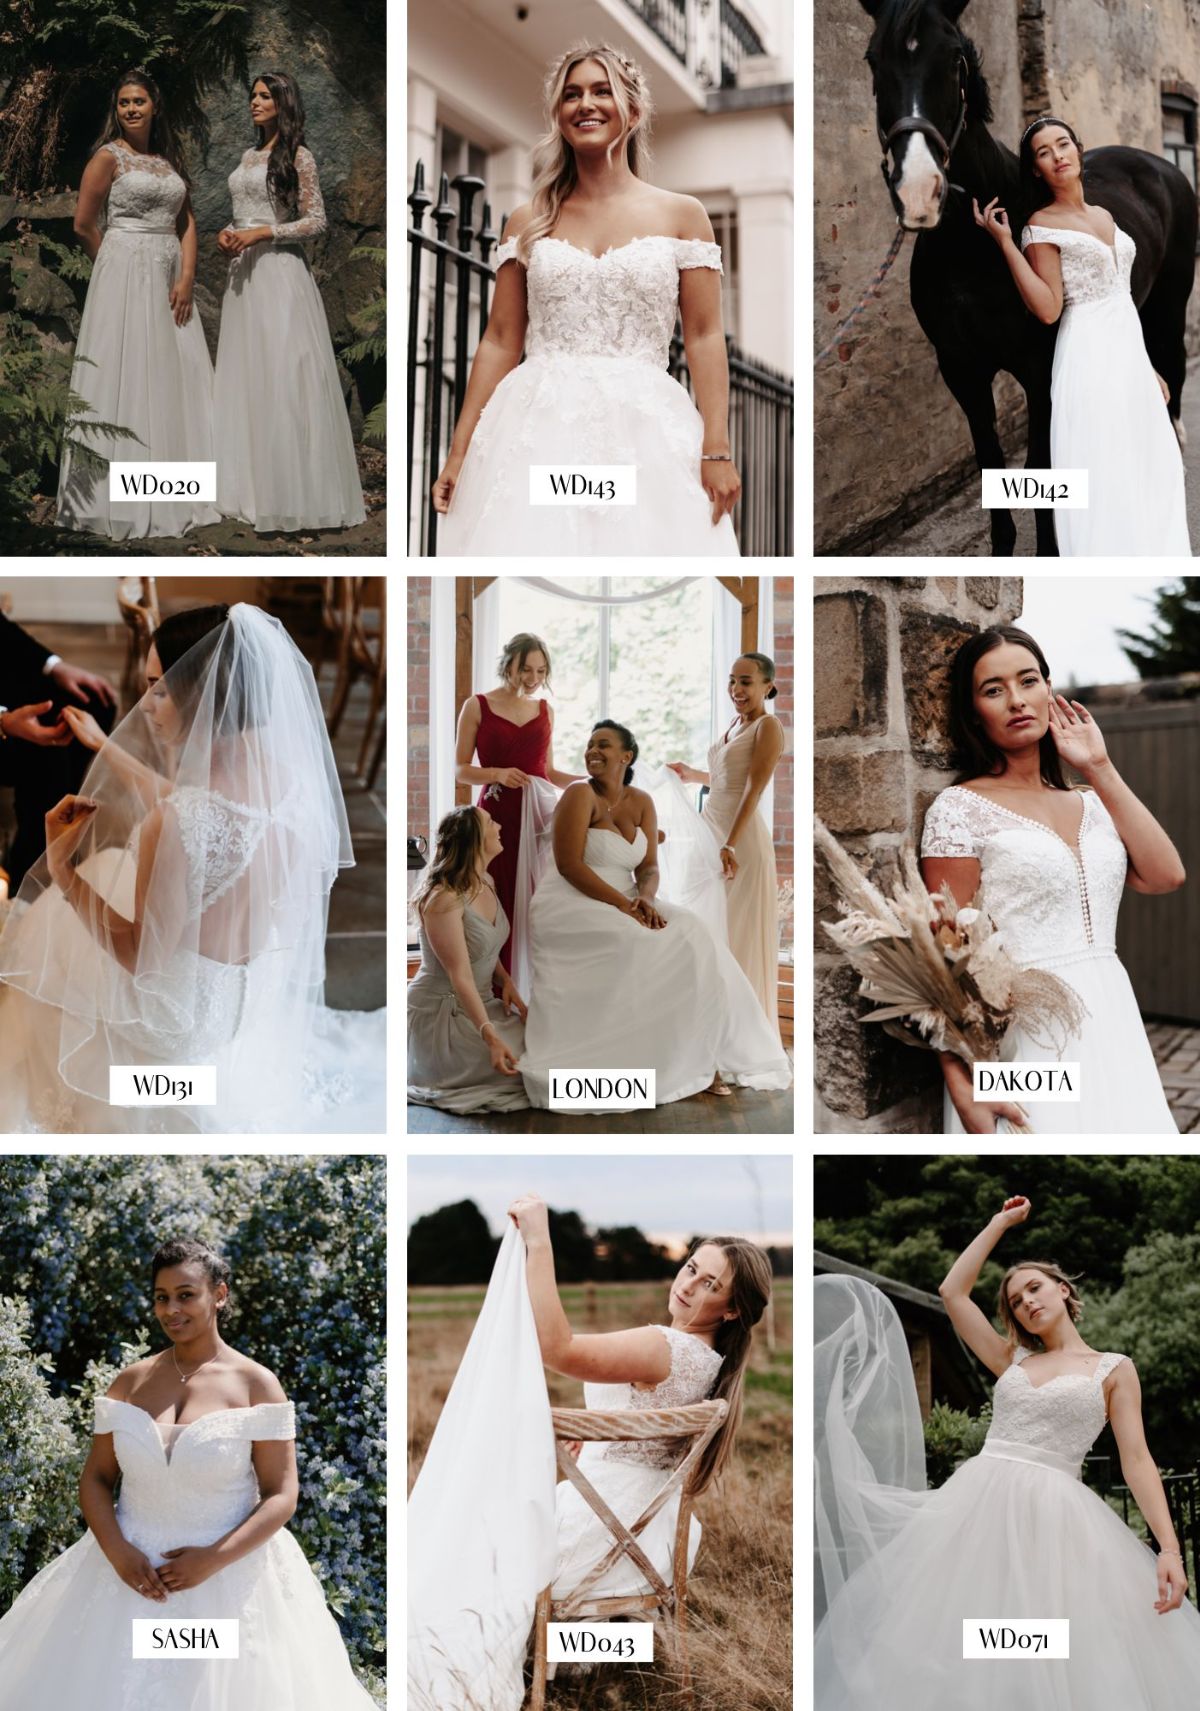 Best Dress 2 Impress Bridal-Image-58